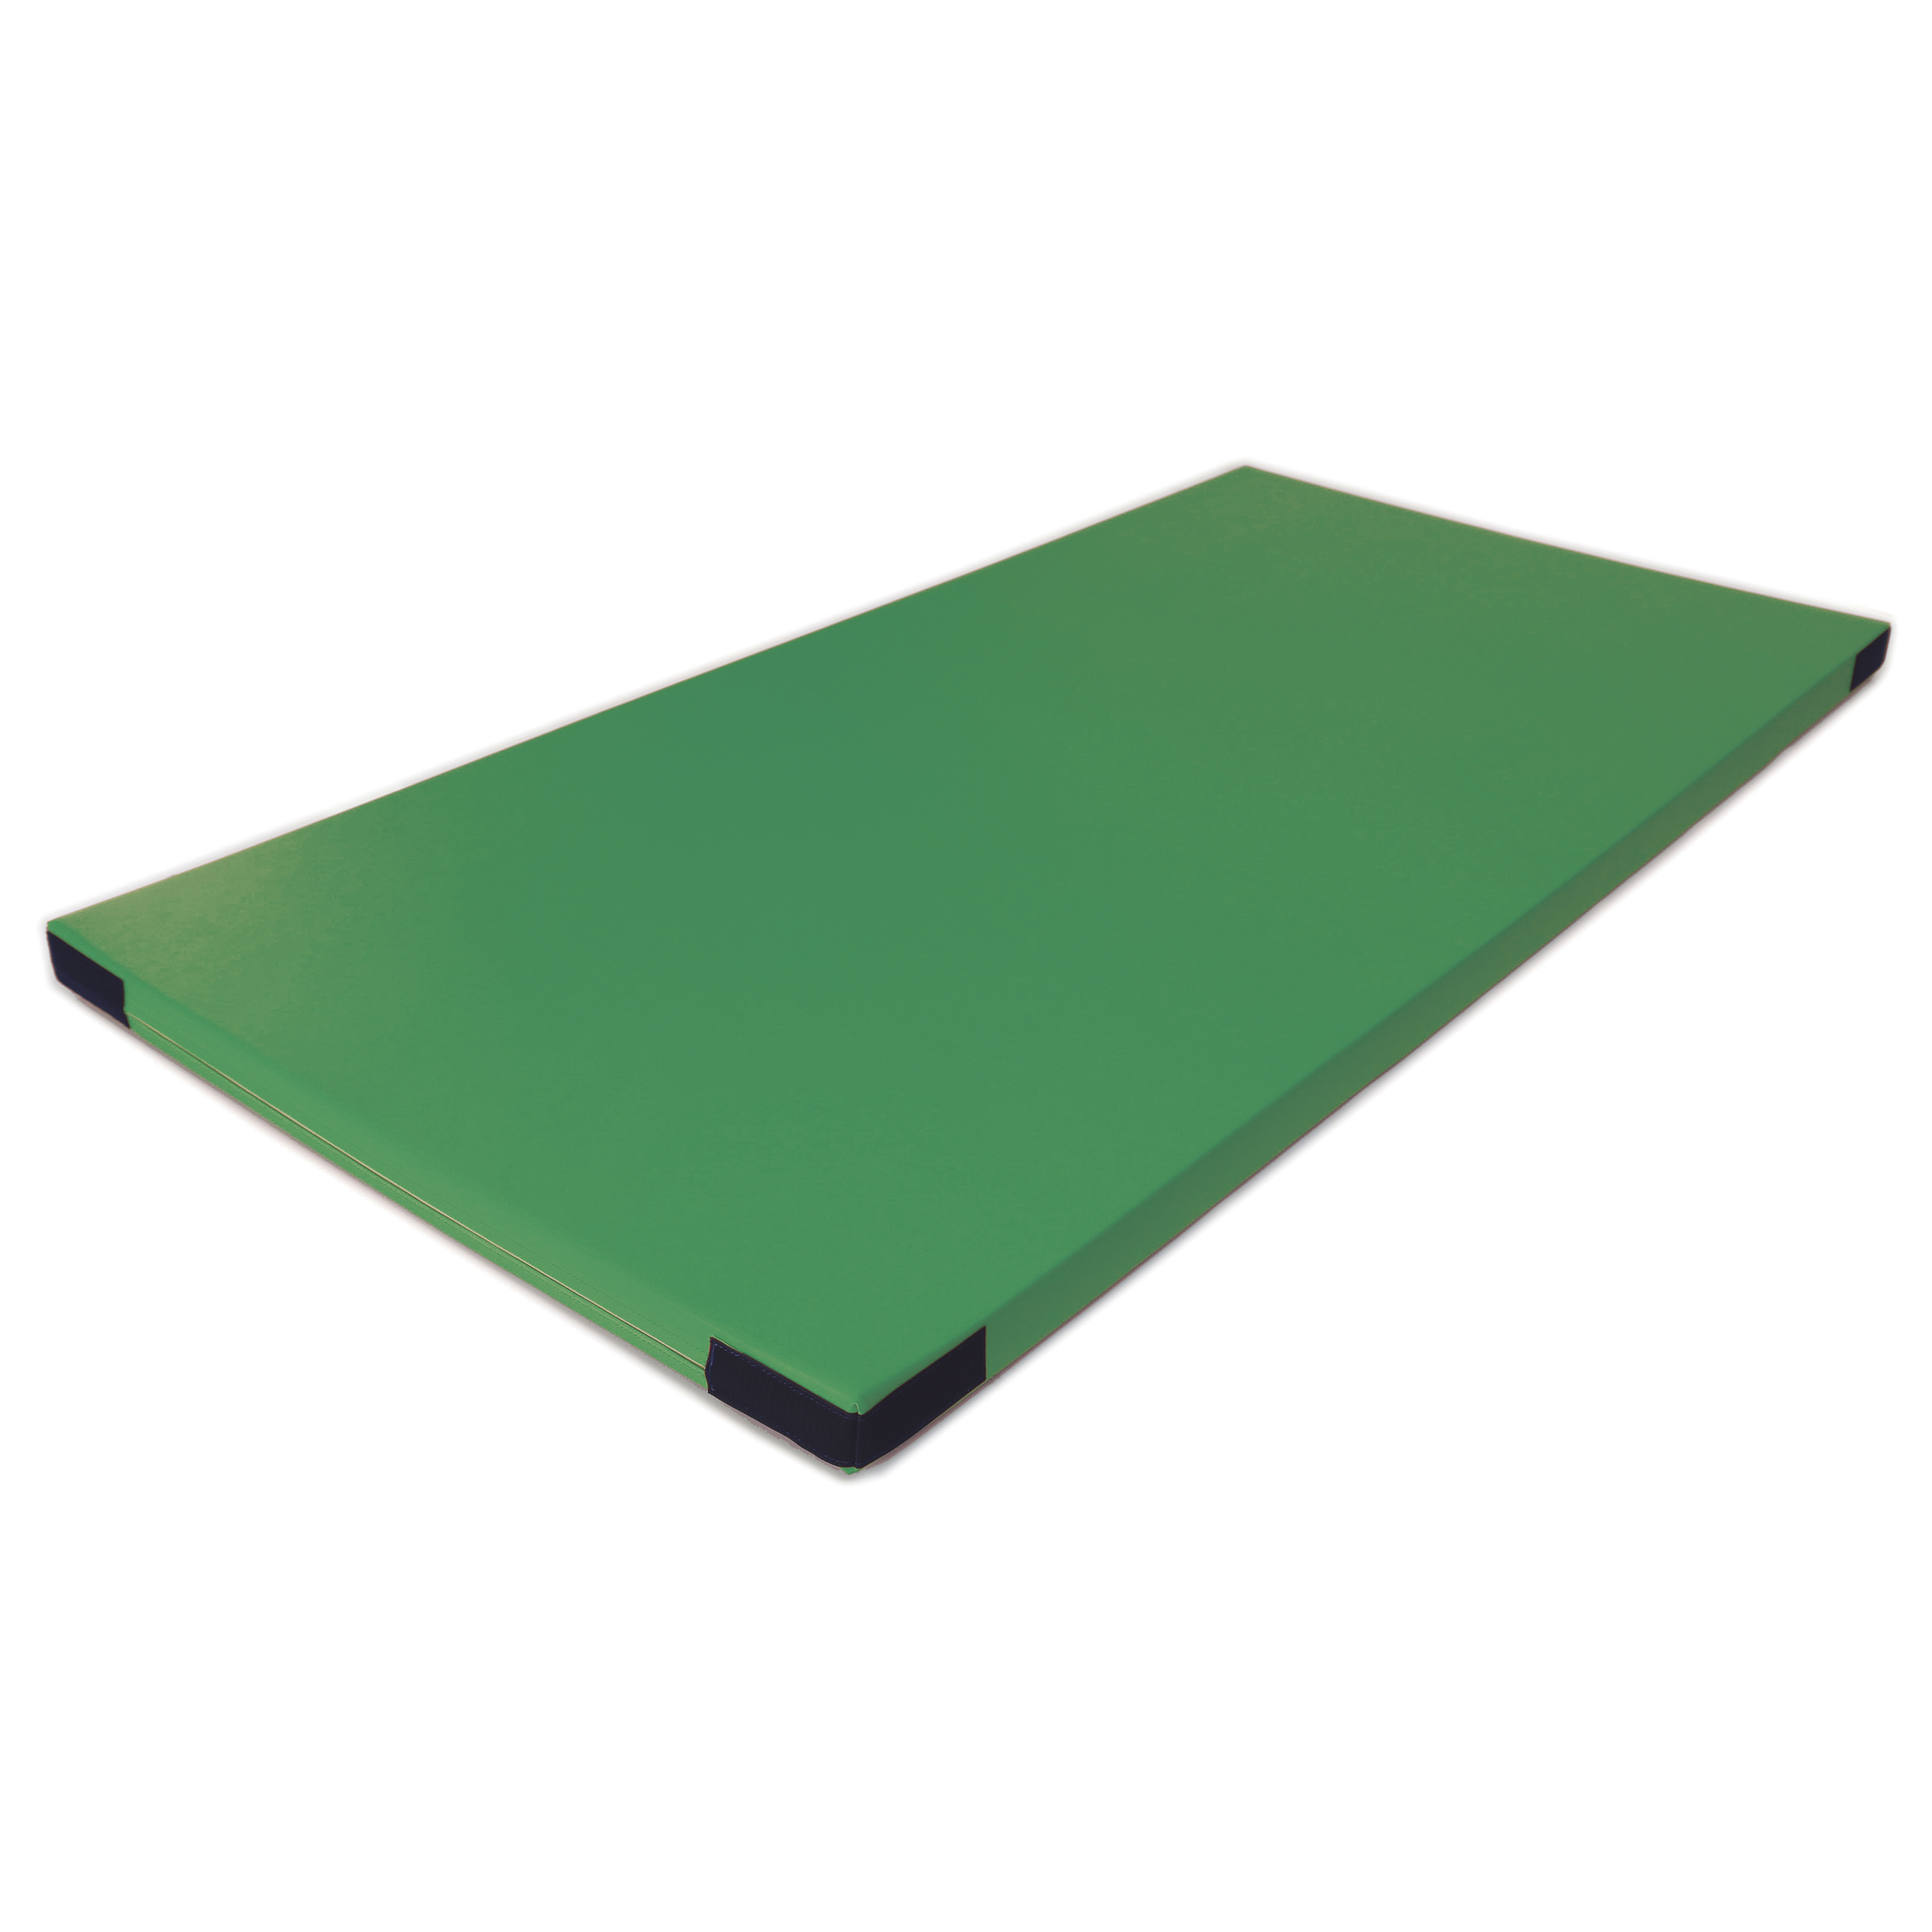 Fallschutzmatte Superleicht 'grün' Klett, 200 x 100 cm